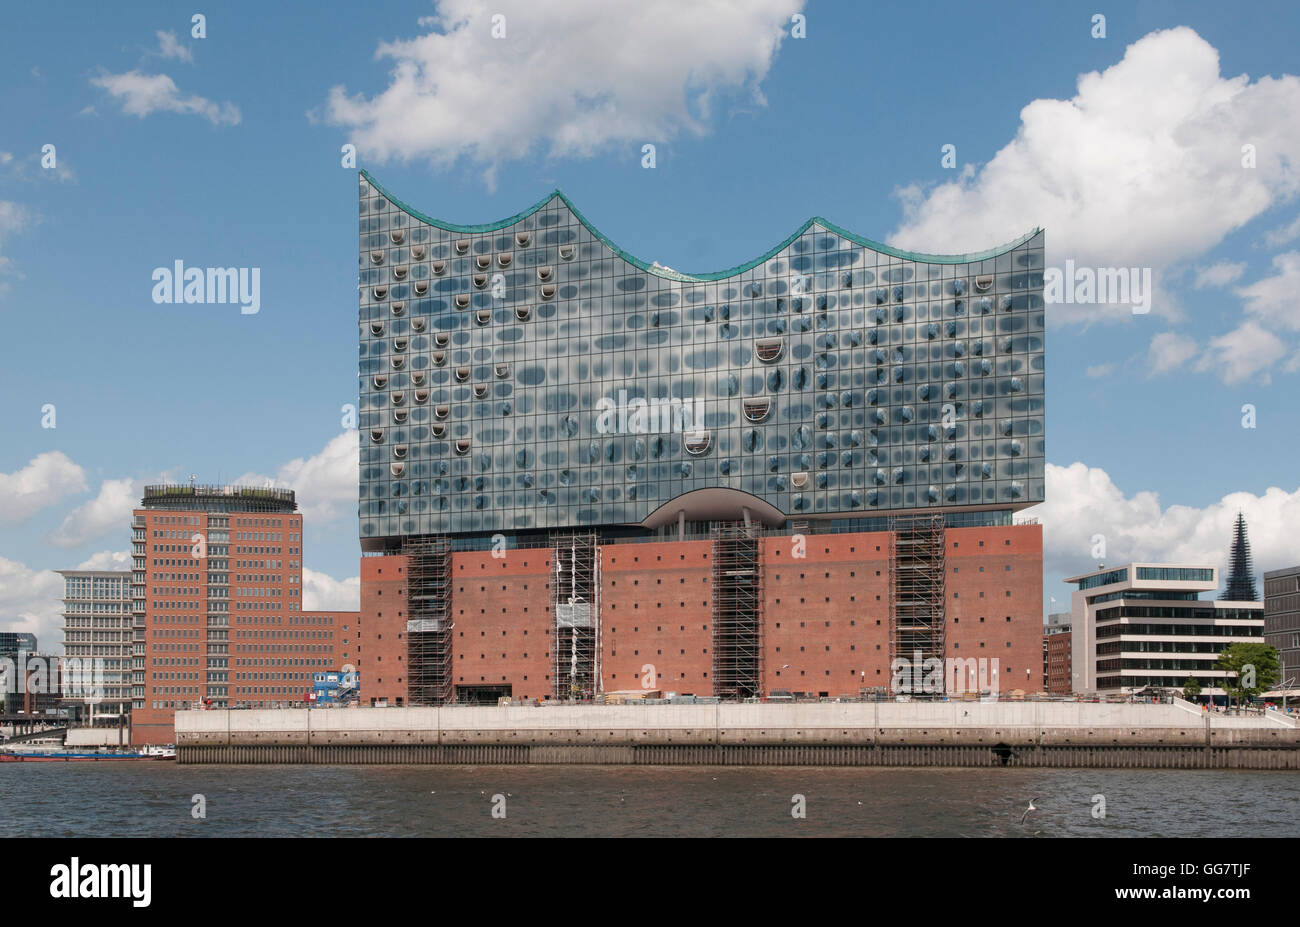 La Elbphilharmonie concert hall, Amburgo, Germania. Progettato dagli architetti Herzog & de Meuron. Foto Stock